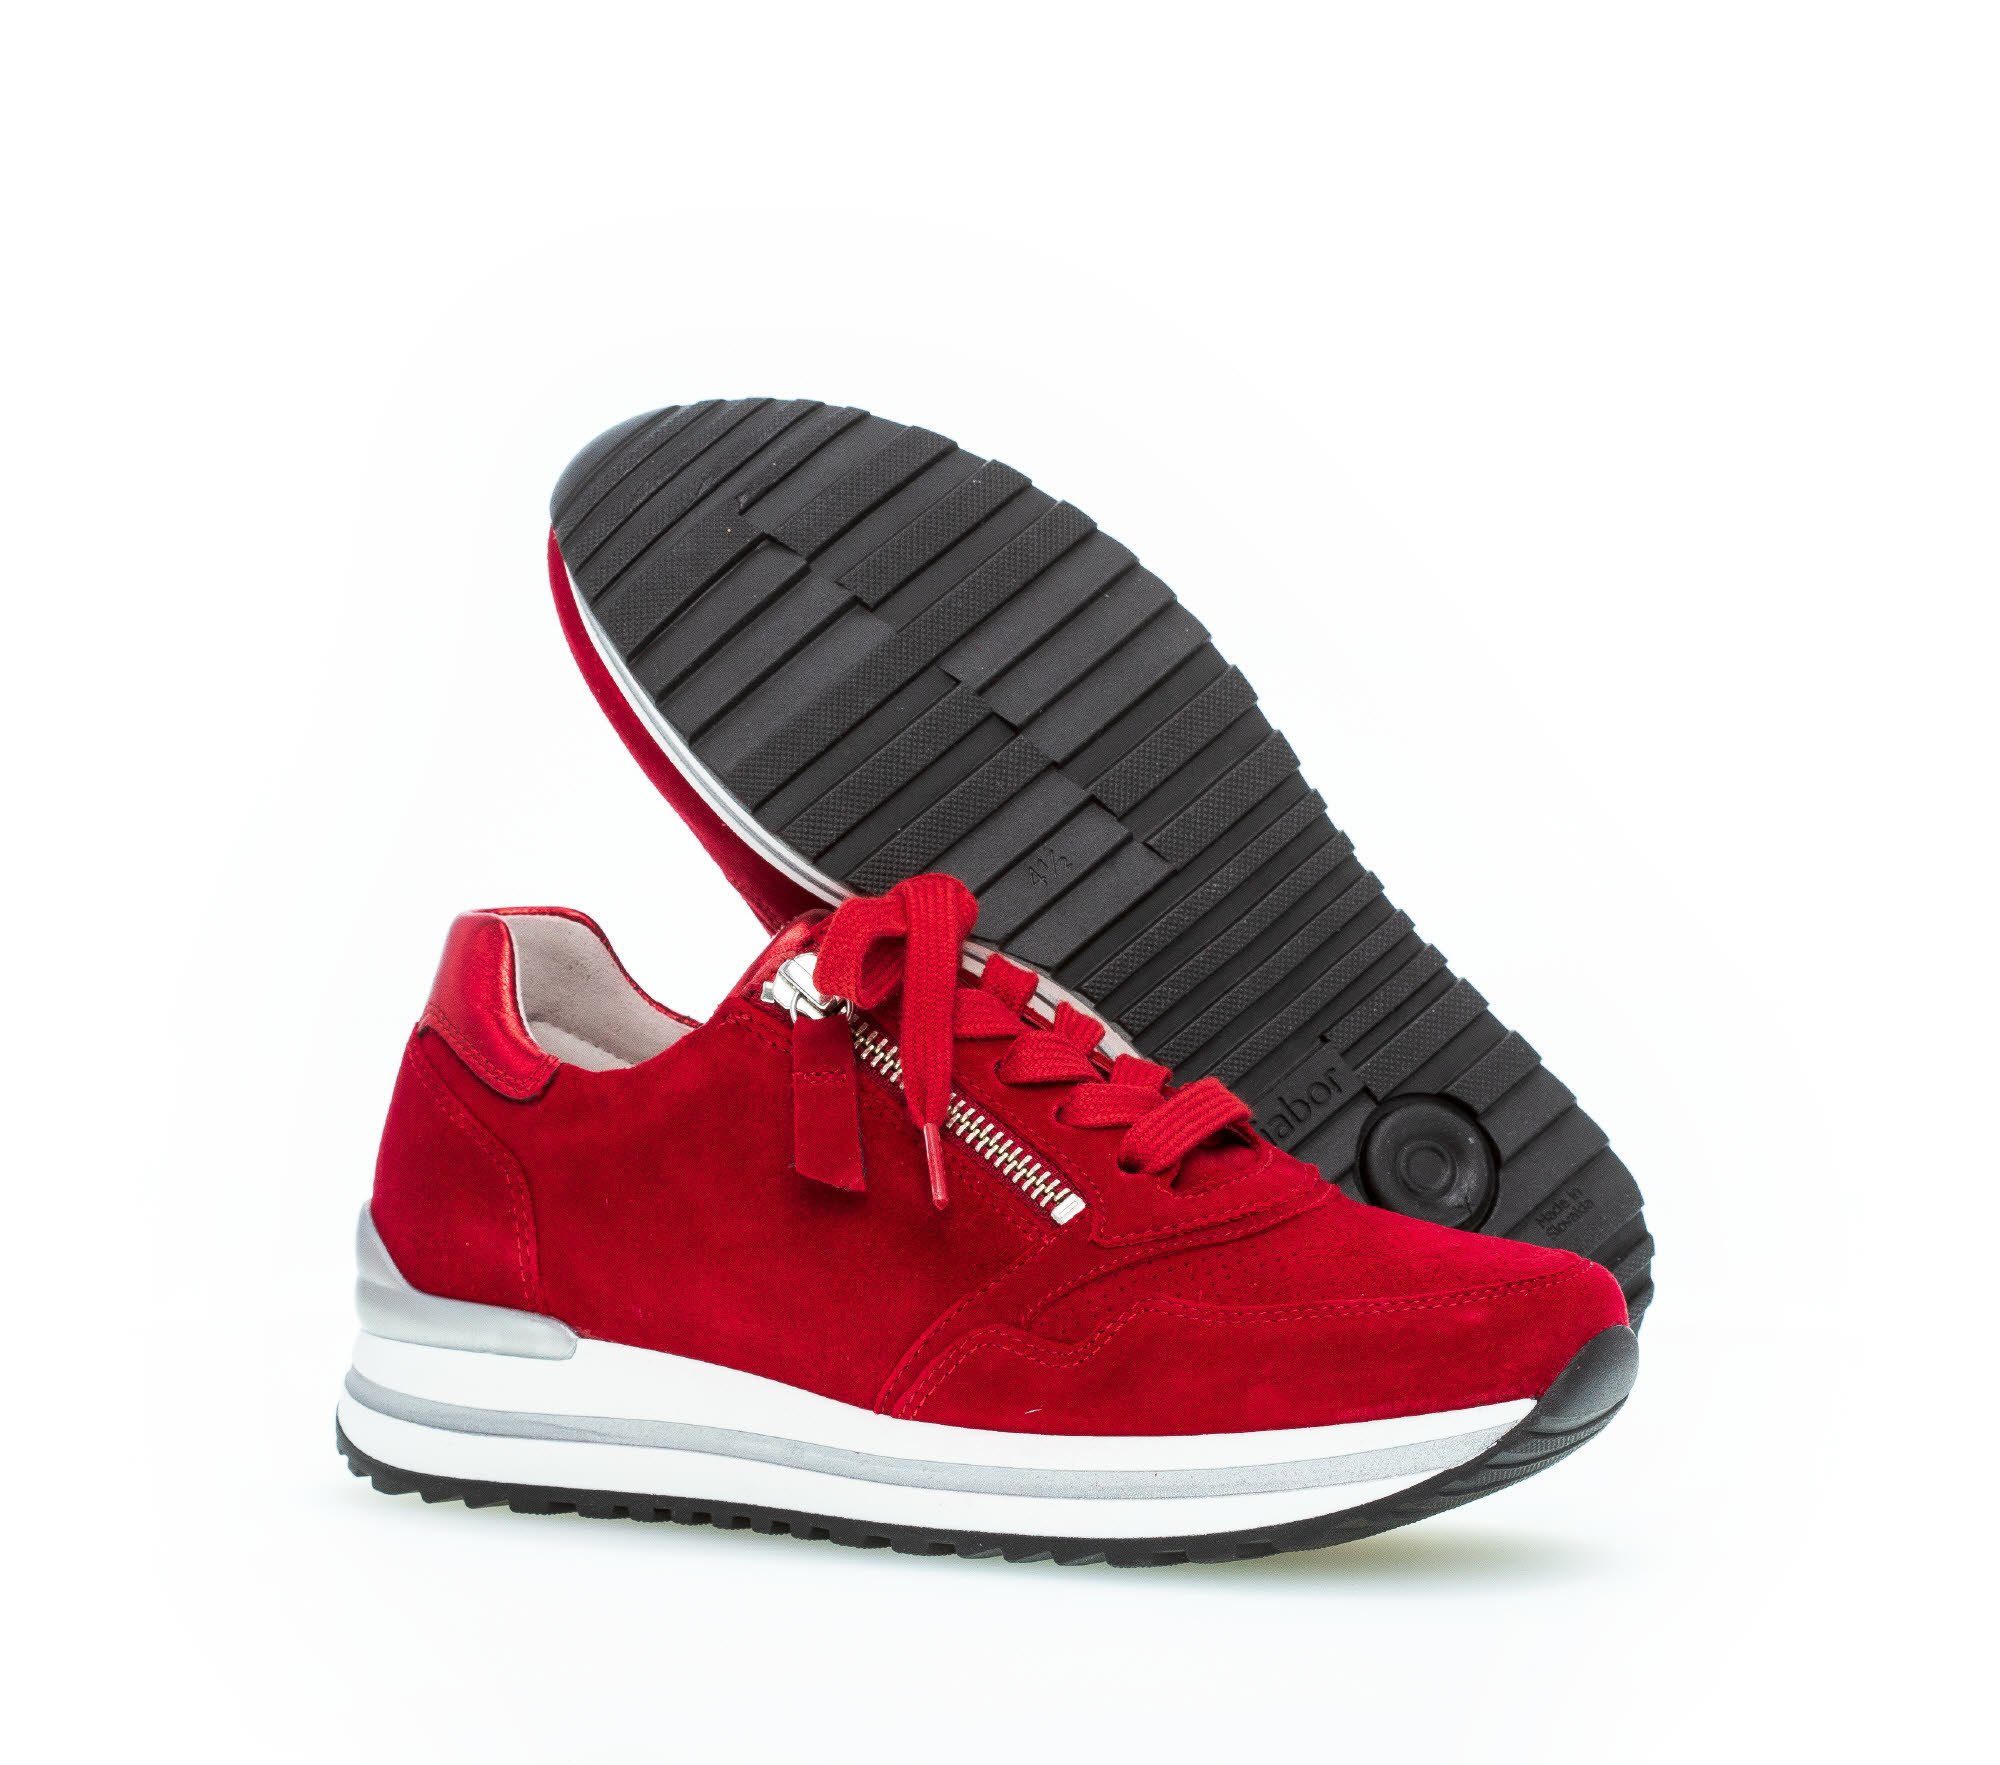 Gabor Rot 86.528.68 Sneaker (rubin.rosso)